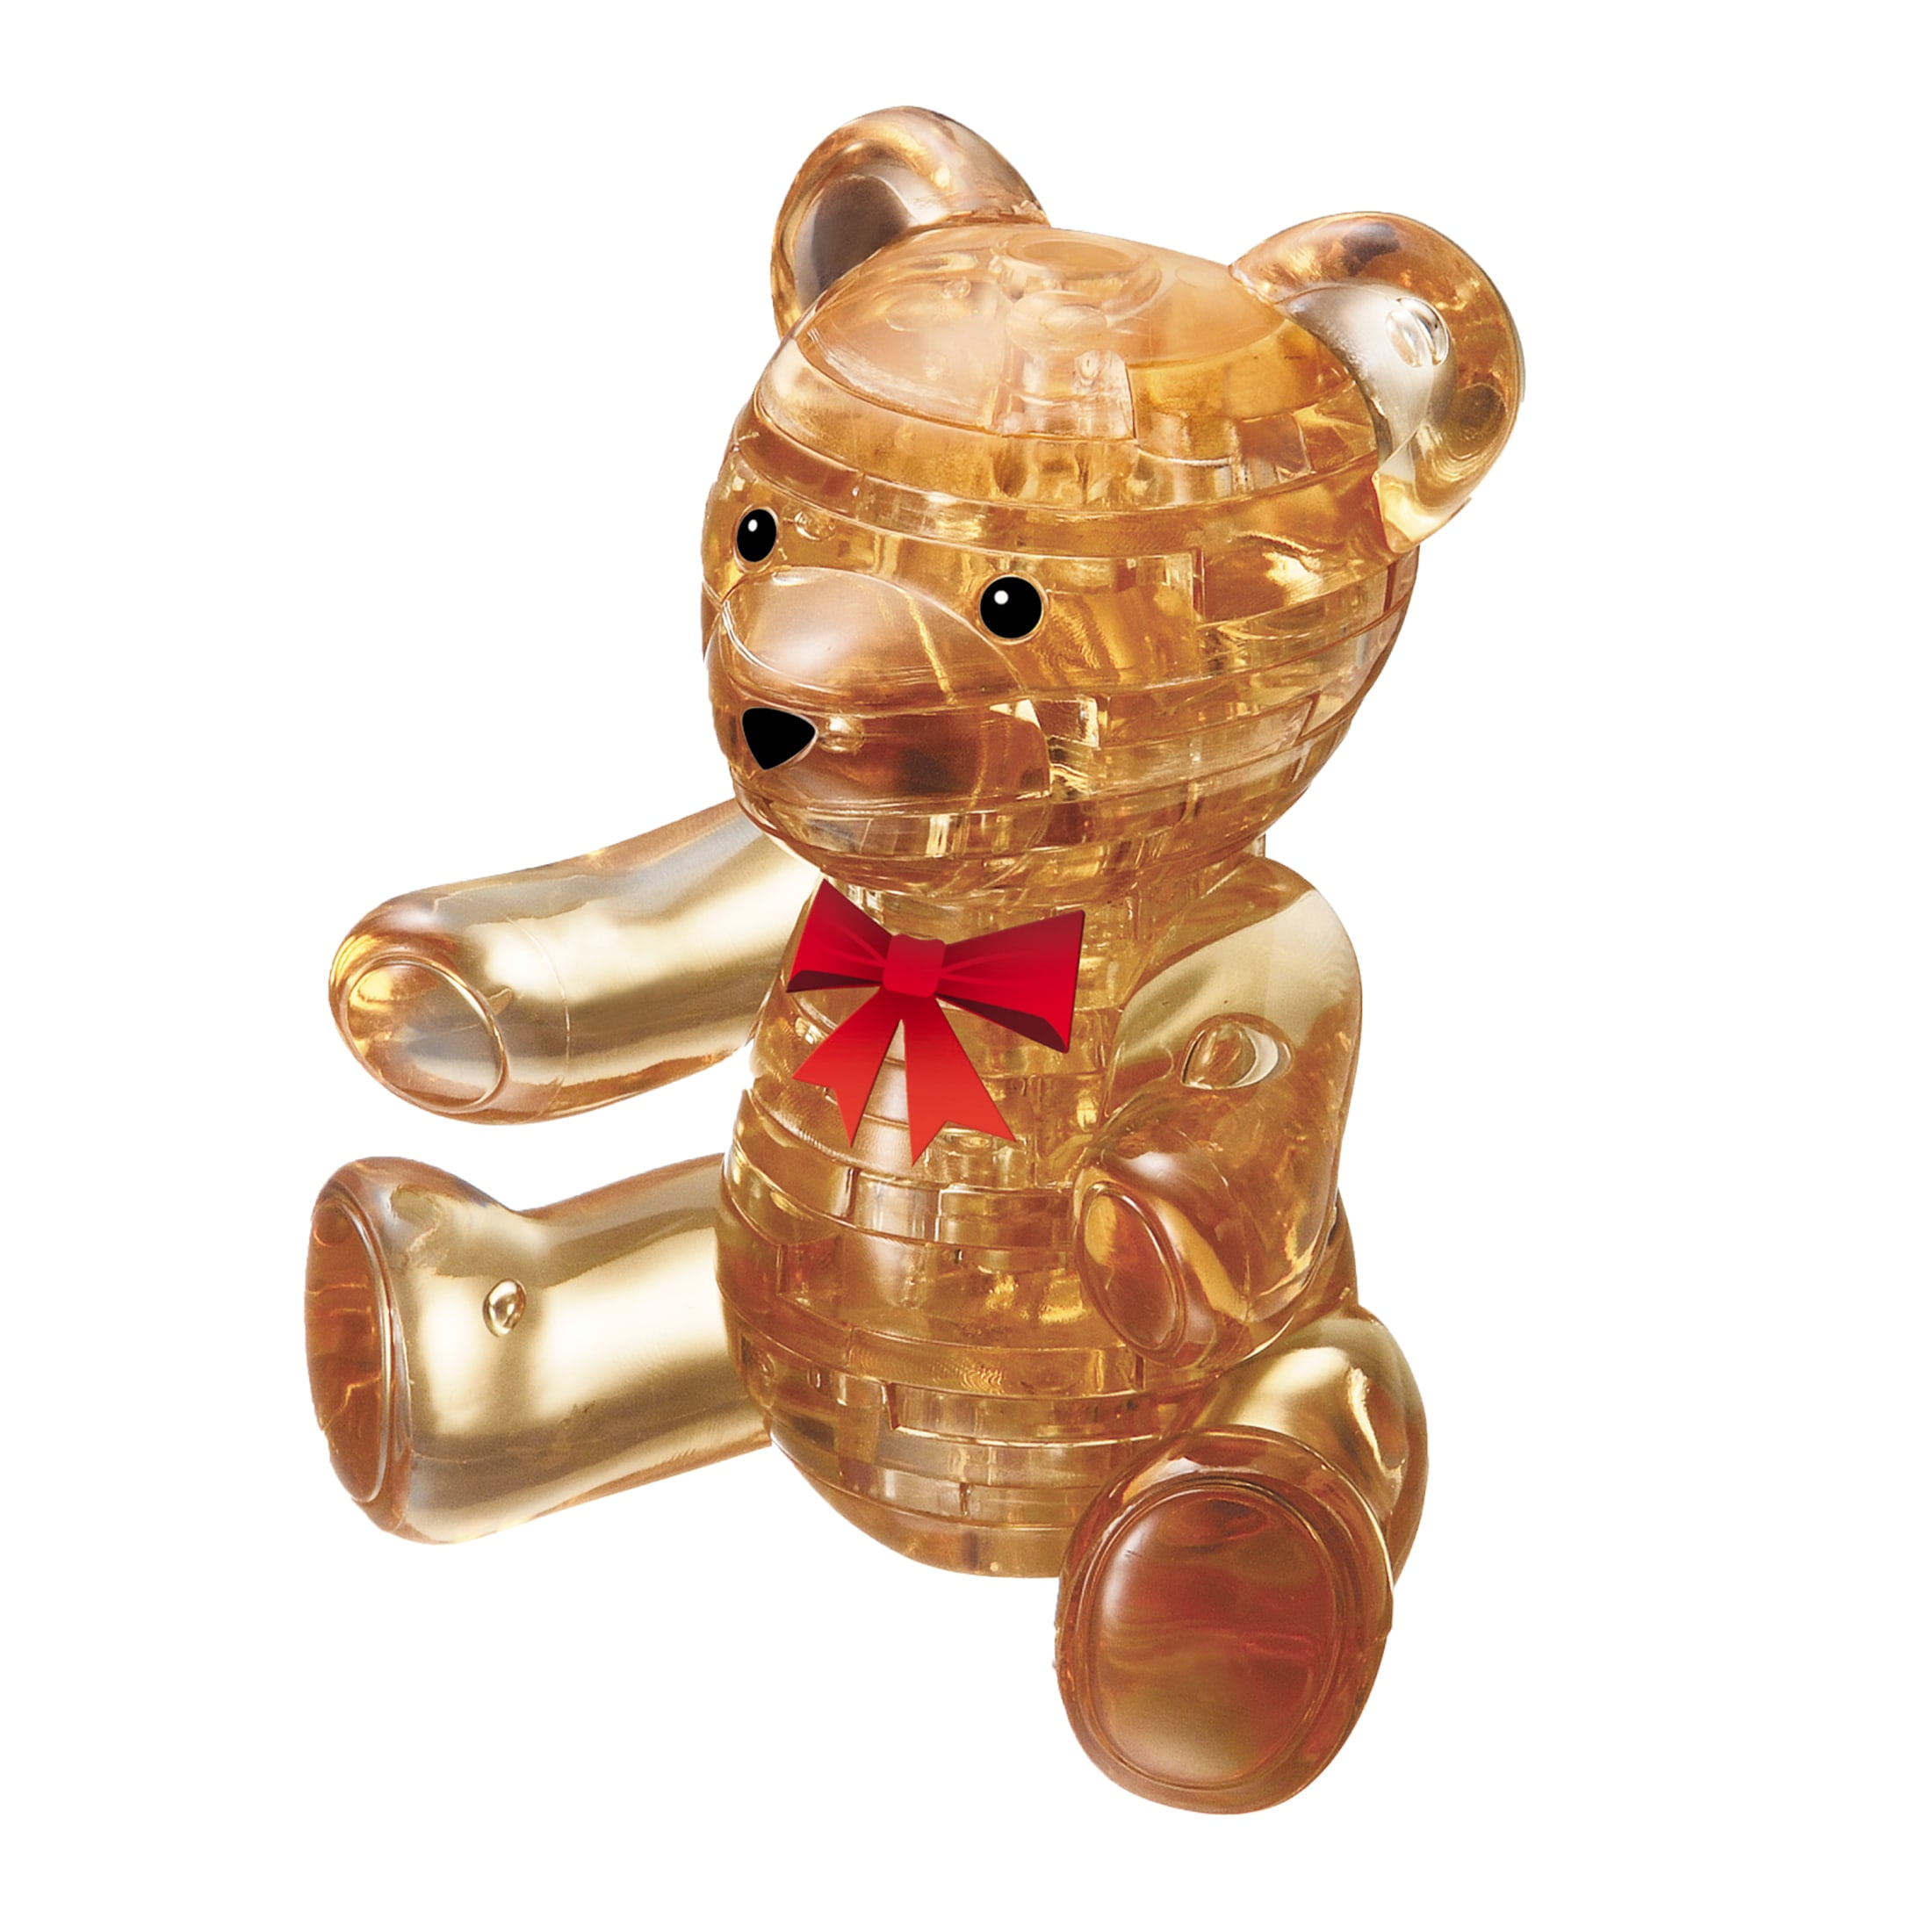 Traditional Teddy Bear Toy Doll Safety ORANGE CATS Crystal Eyes METAL BACKS 